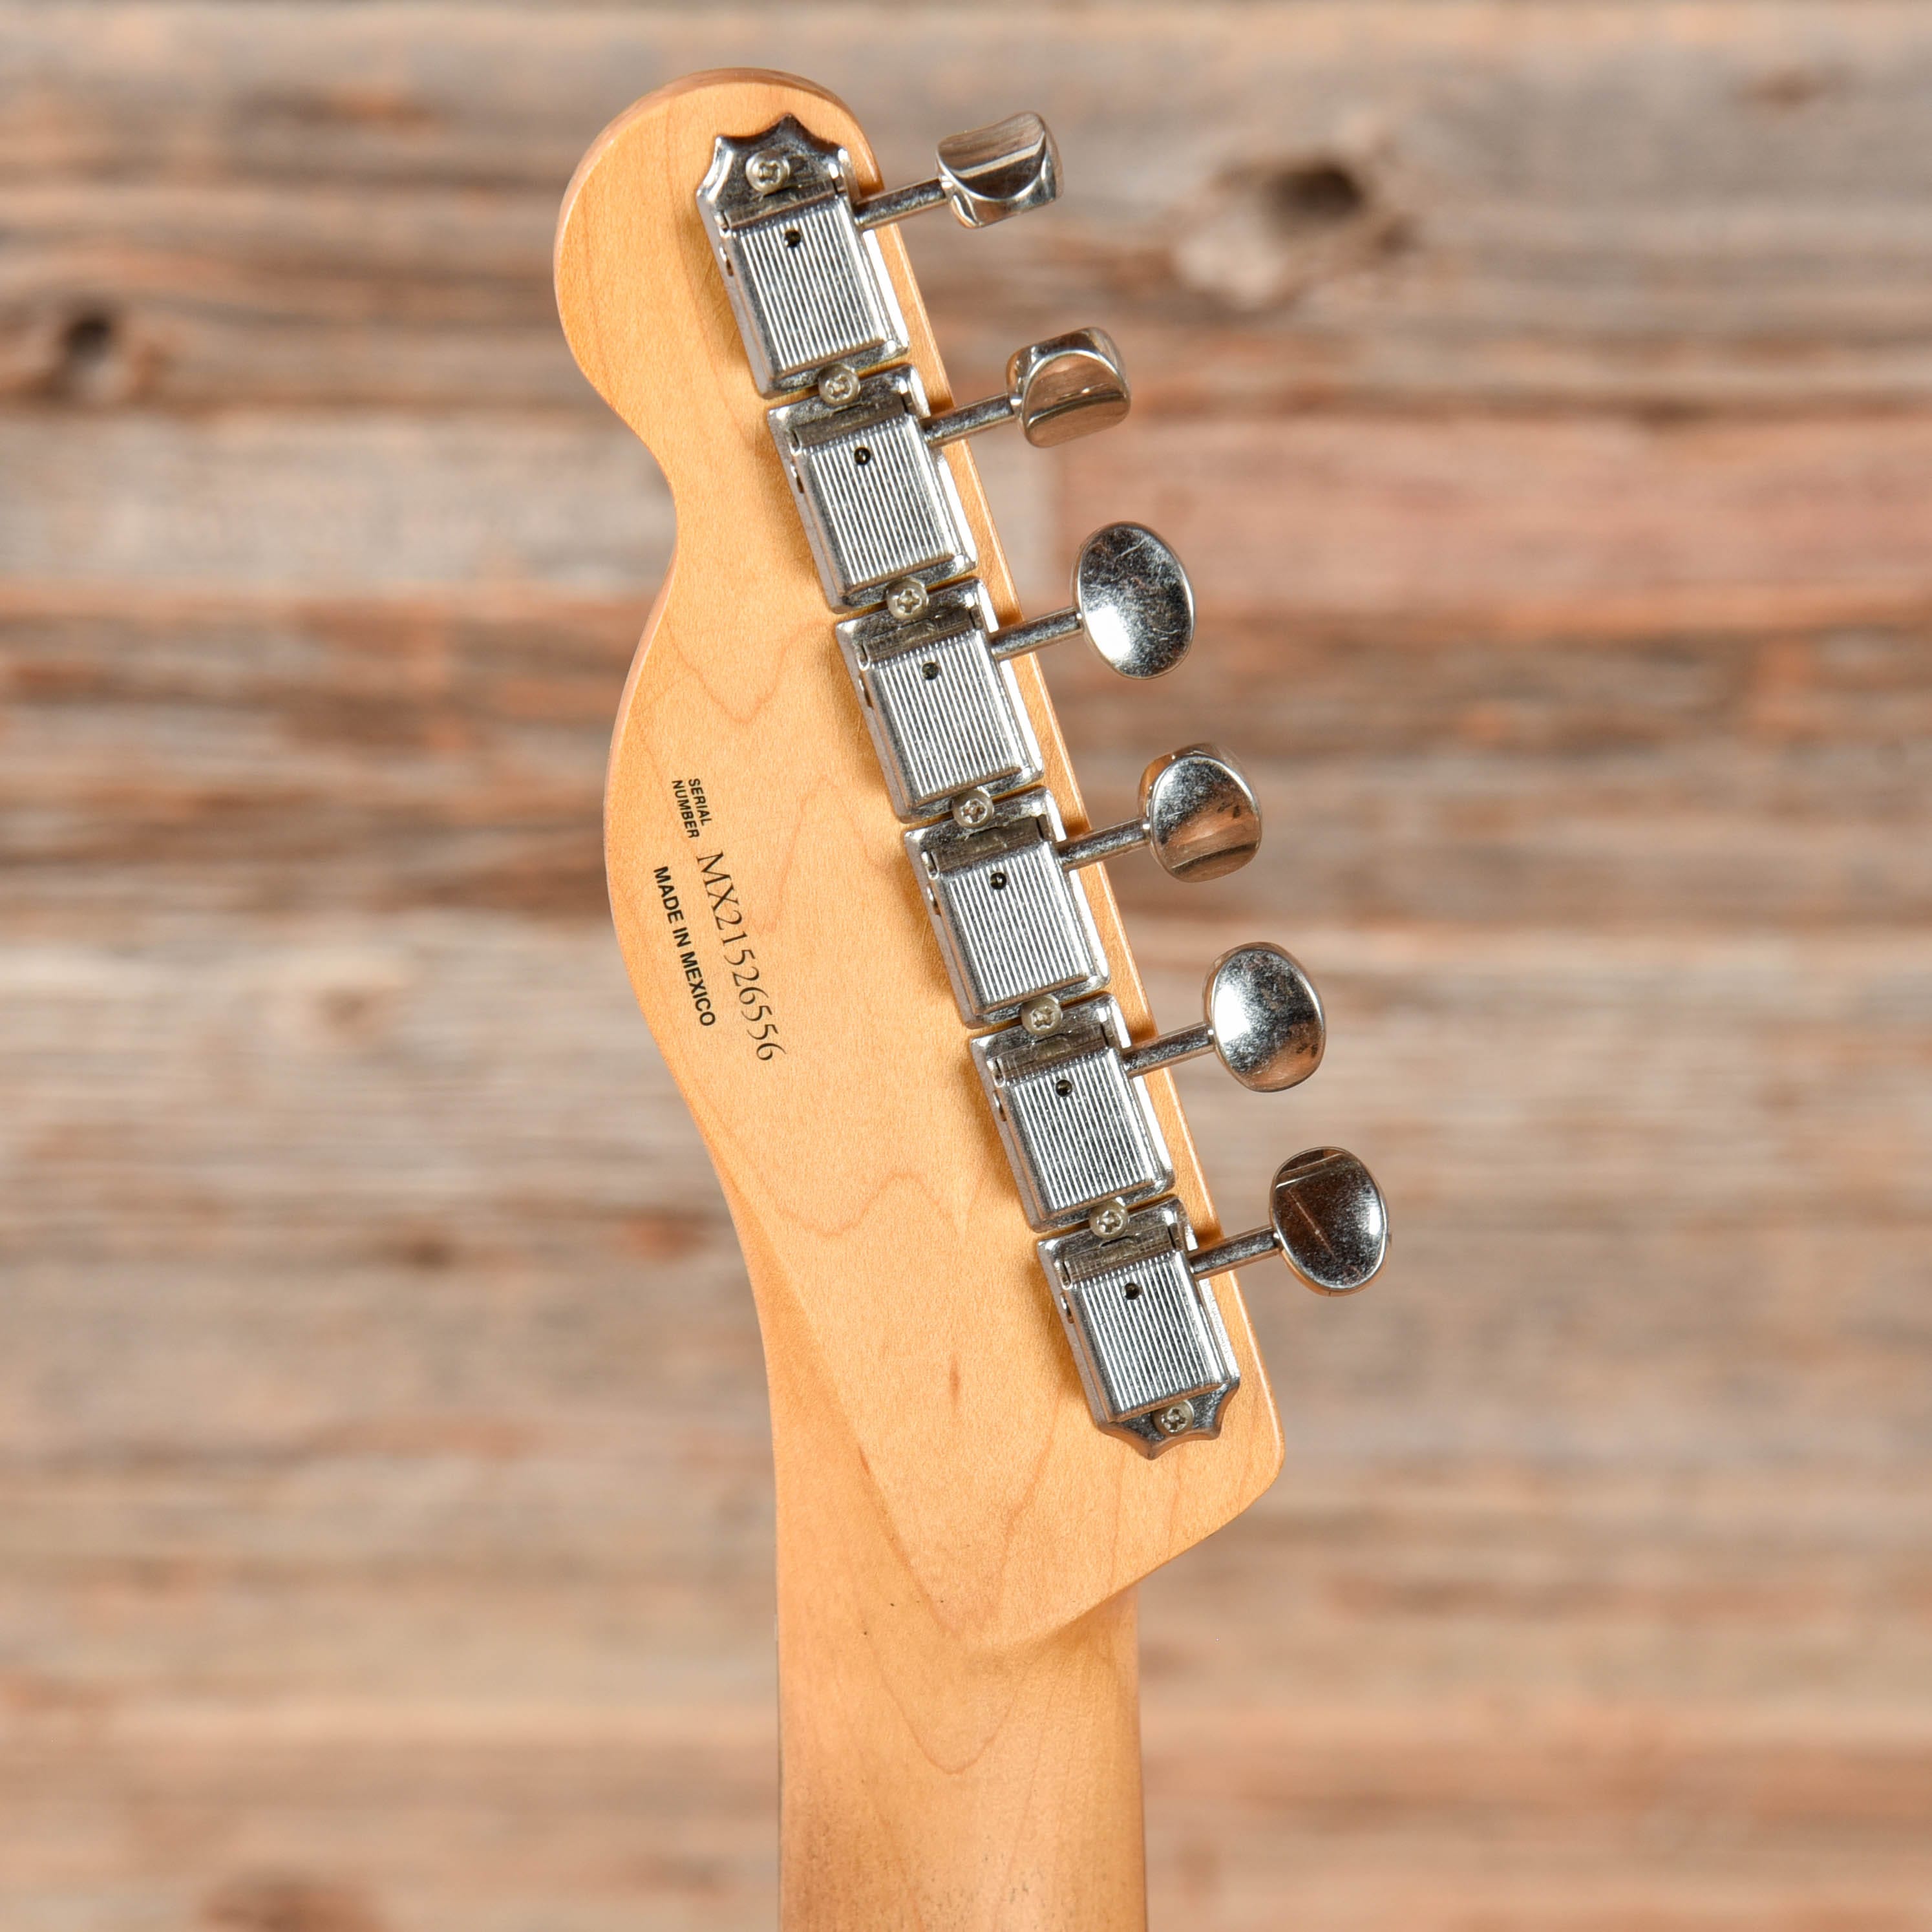 Fender Jason Isbell Signature Telecaster Custom Road Worn Chocolate Sunburst 2021 Electric Guitars / Solid Body